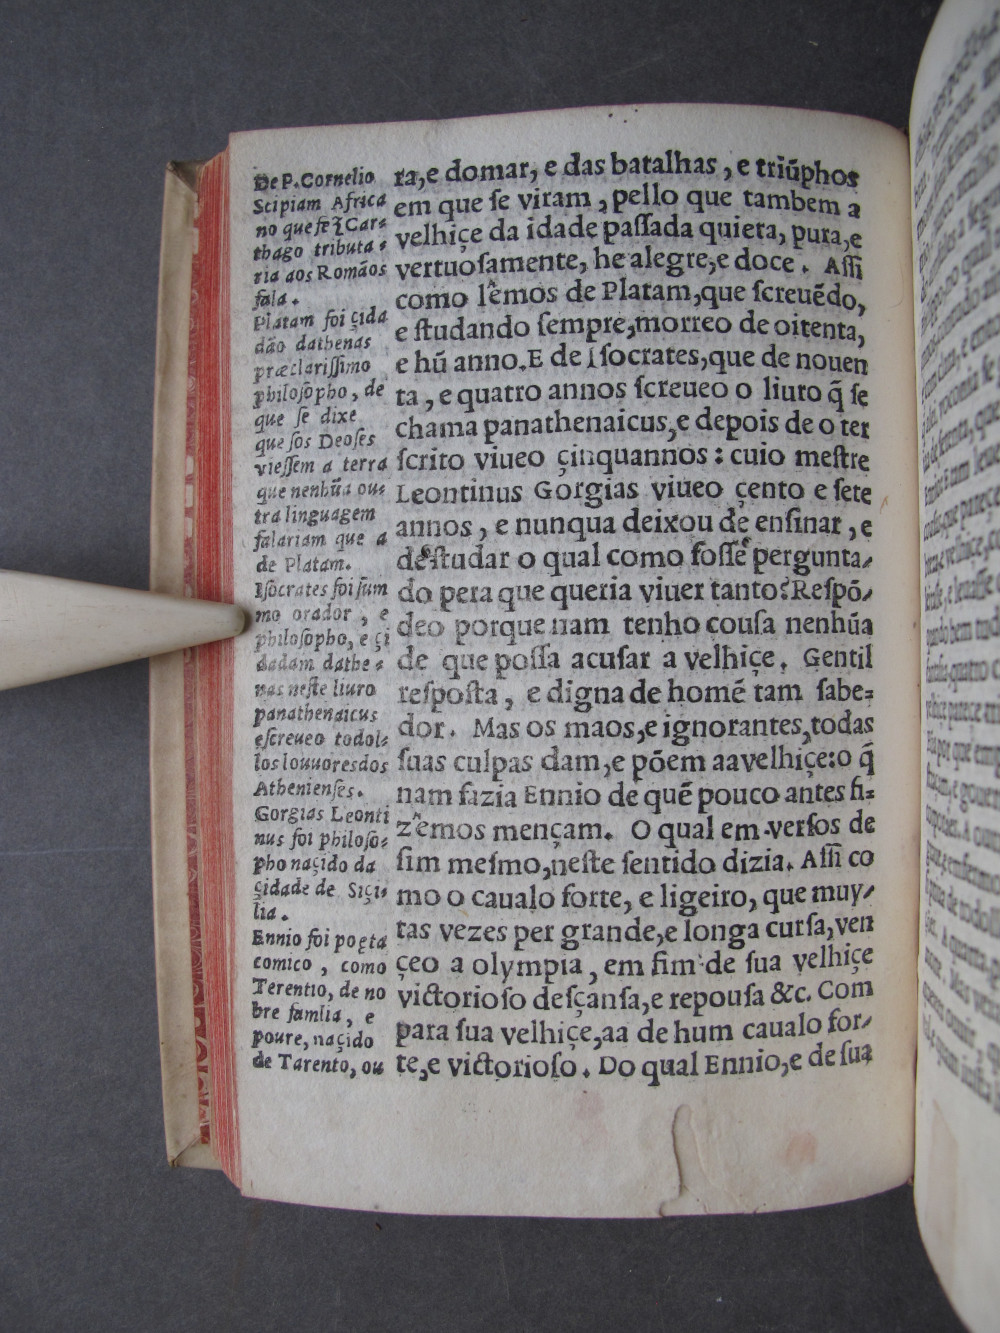 Folio B1 verso